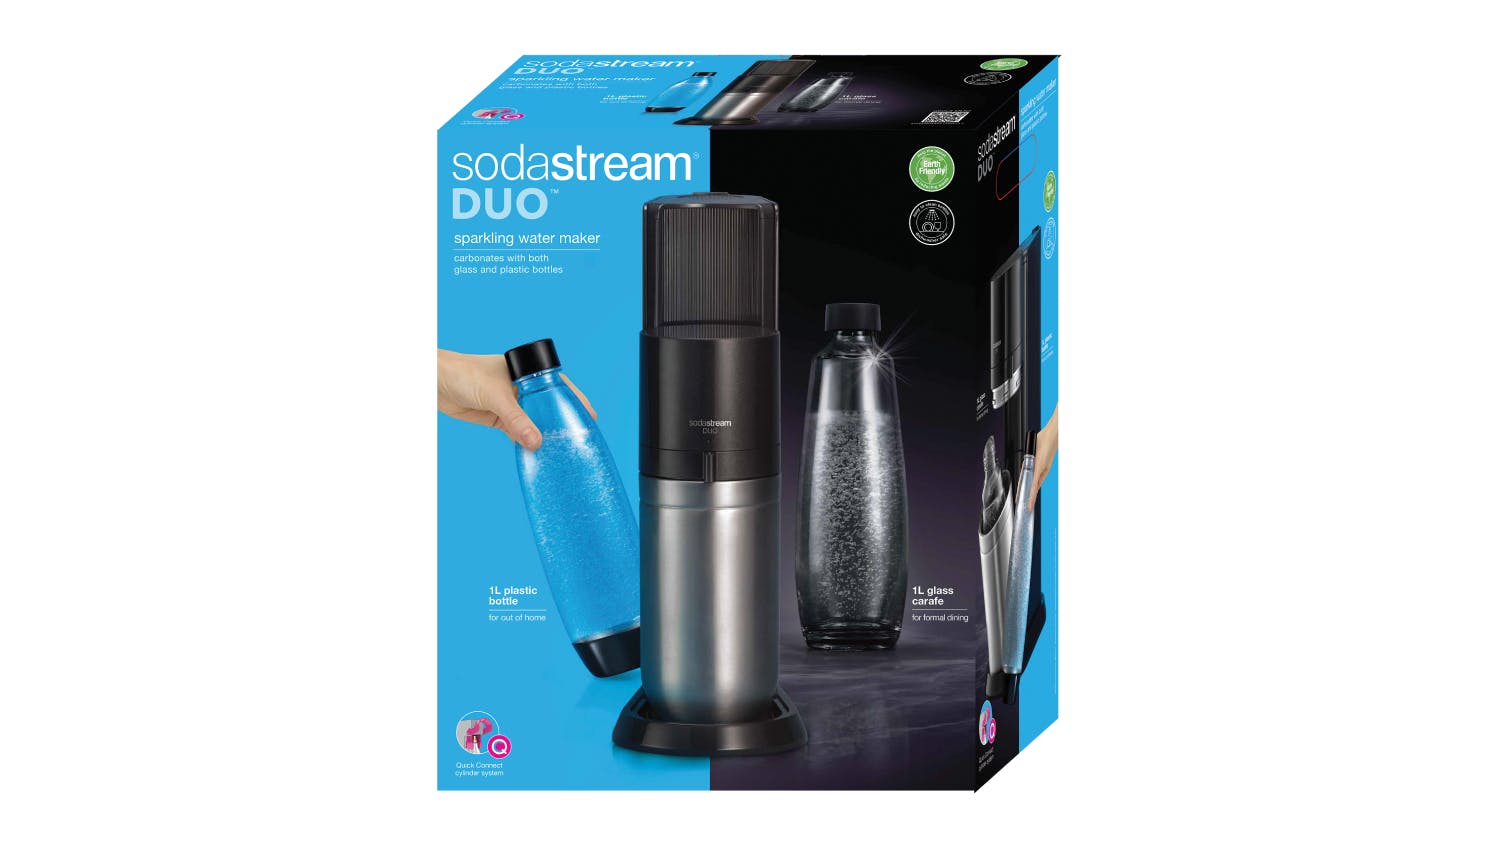 SodaStream Duo Sparkling Water Maker (Black) 1016812611